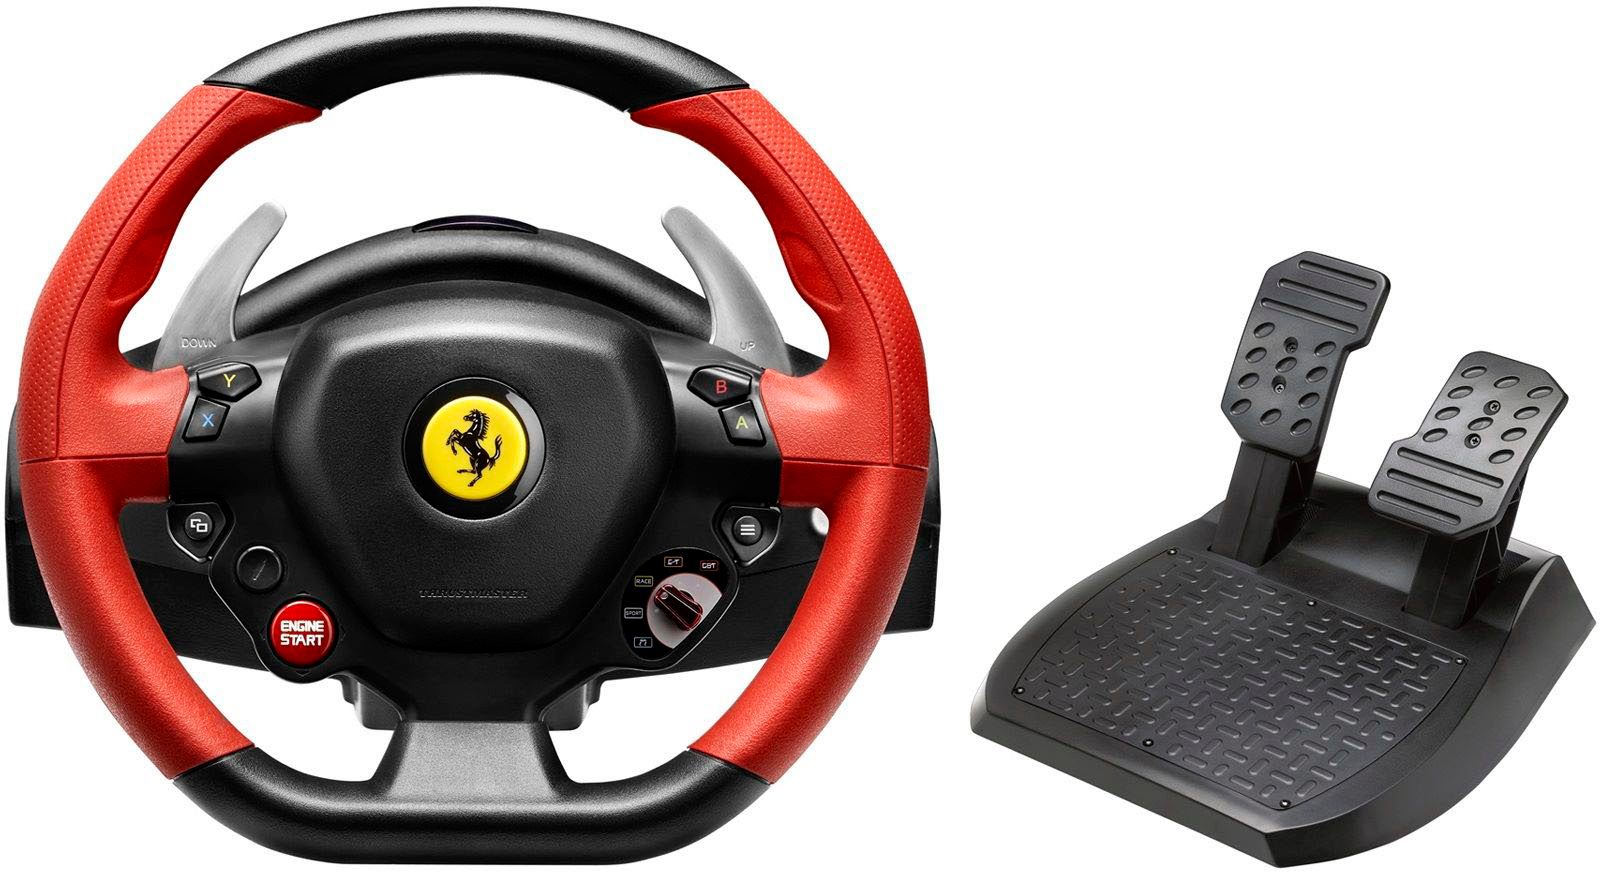 Thrustmaster Ferrari 458 Spider Racing Wheel for Xbox One Black/Red/Yellow  4460105 - Best Buy